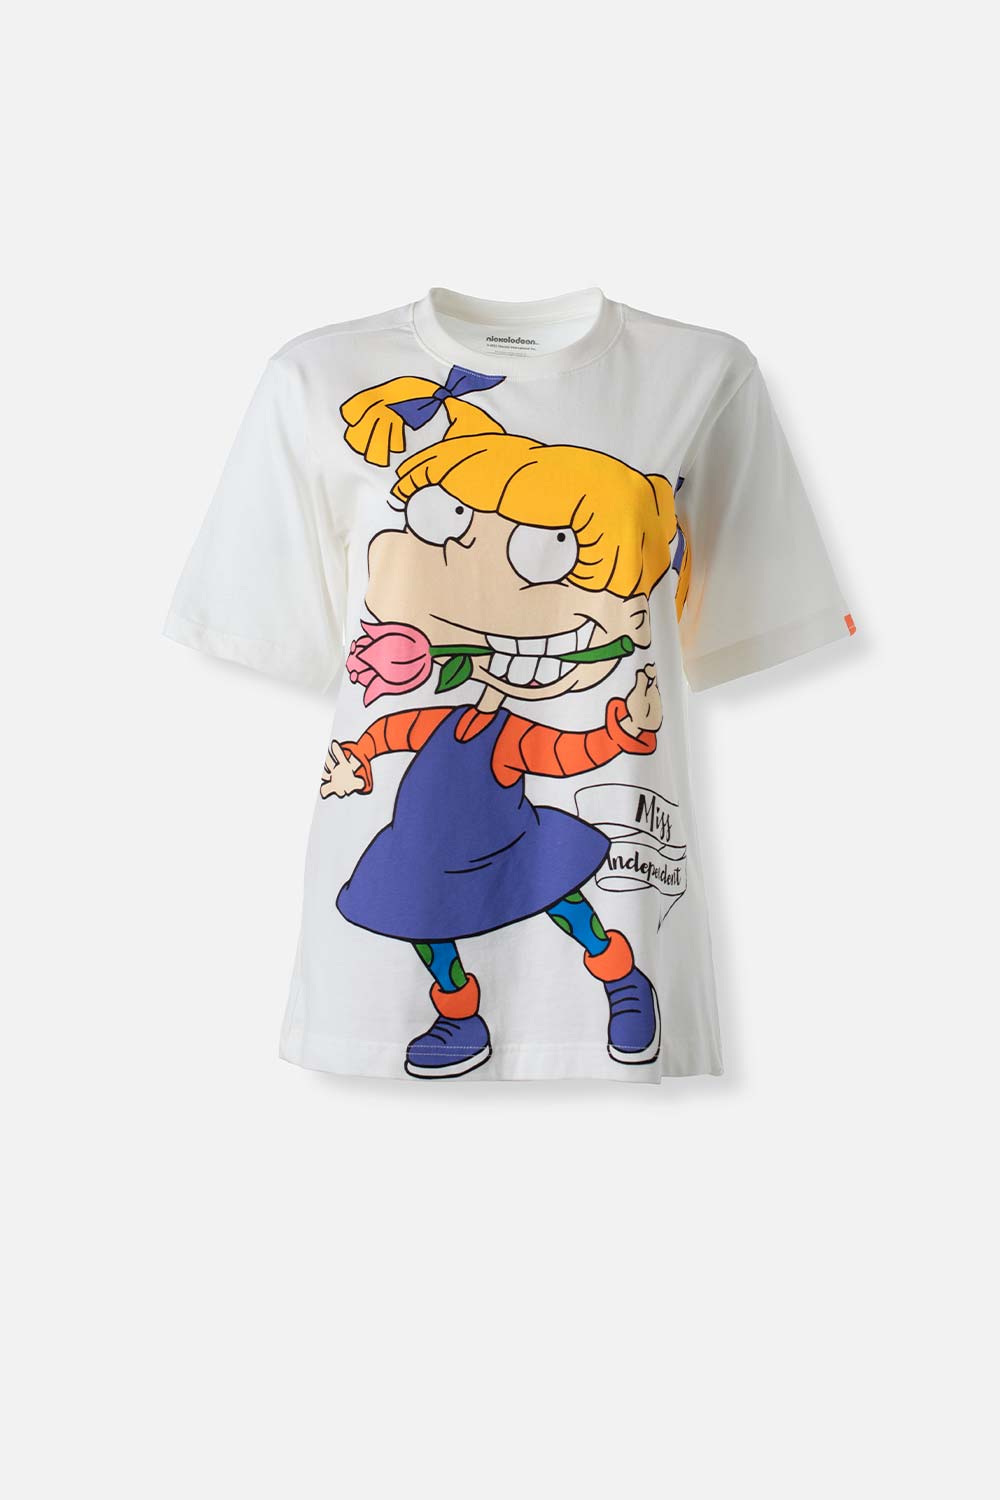 Camiseta de Angelica manga corta marfil para mujer XS-0